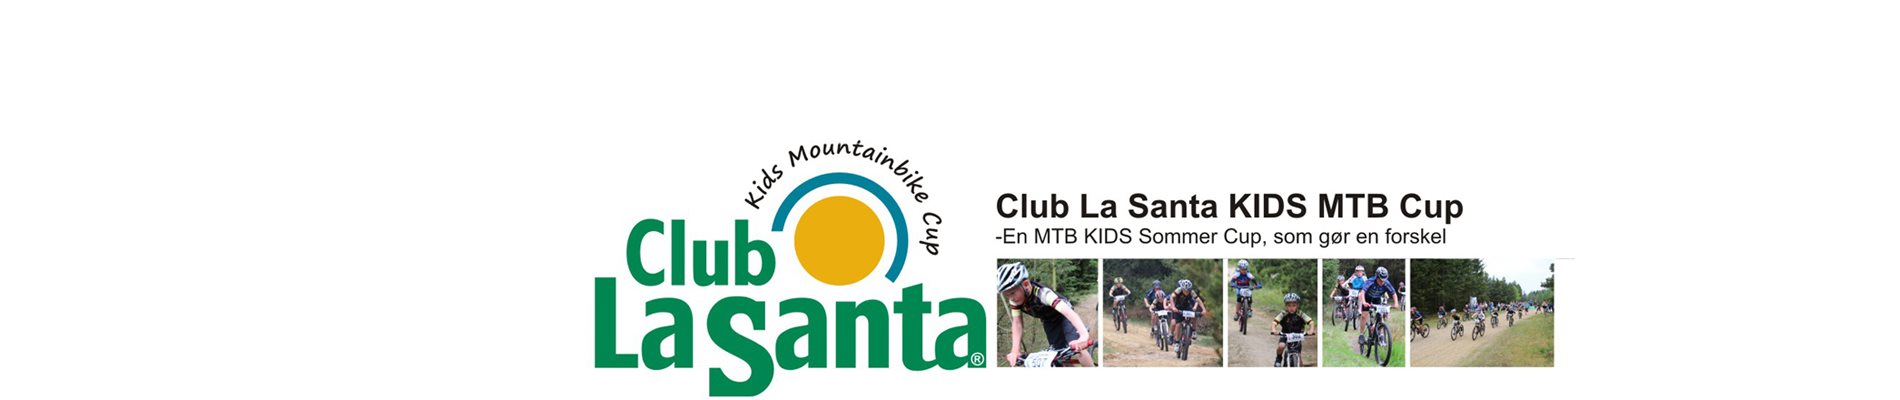 CLUB LA SANTA KIDS MTB CUP '20 - #1 Sdr. Plantage, Varde